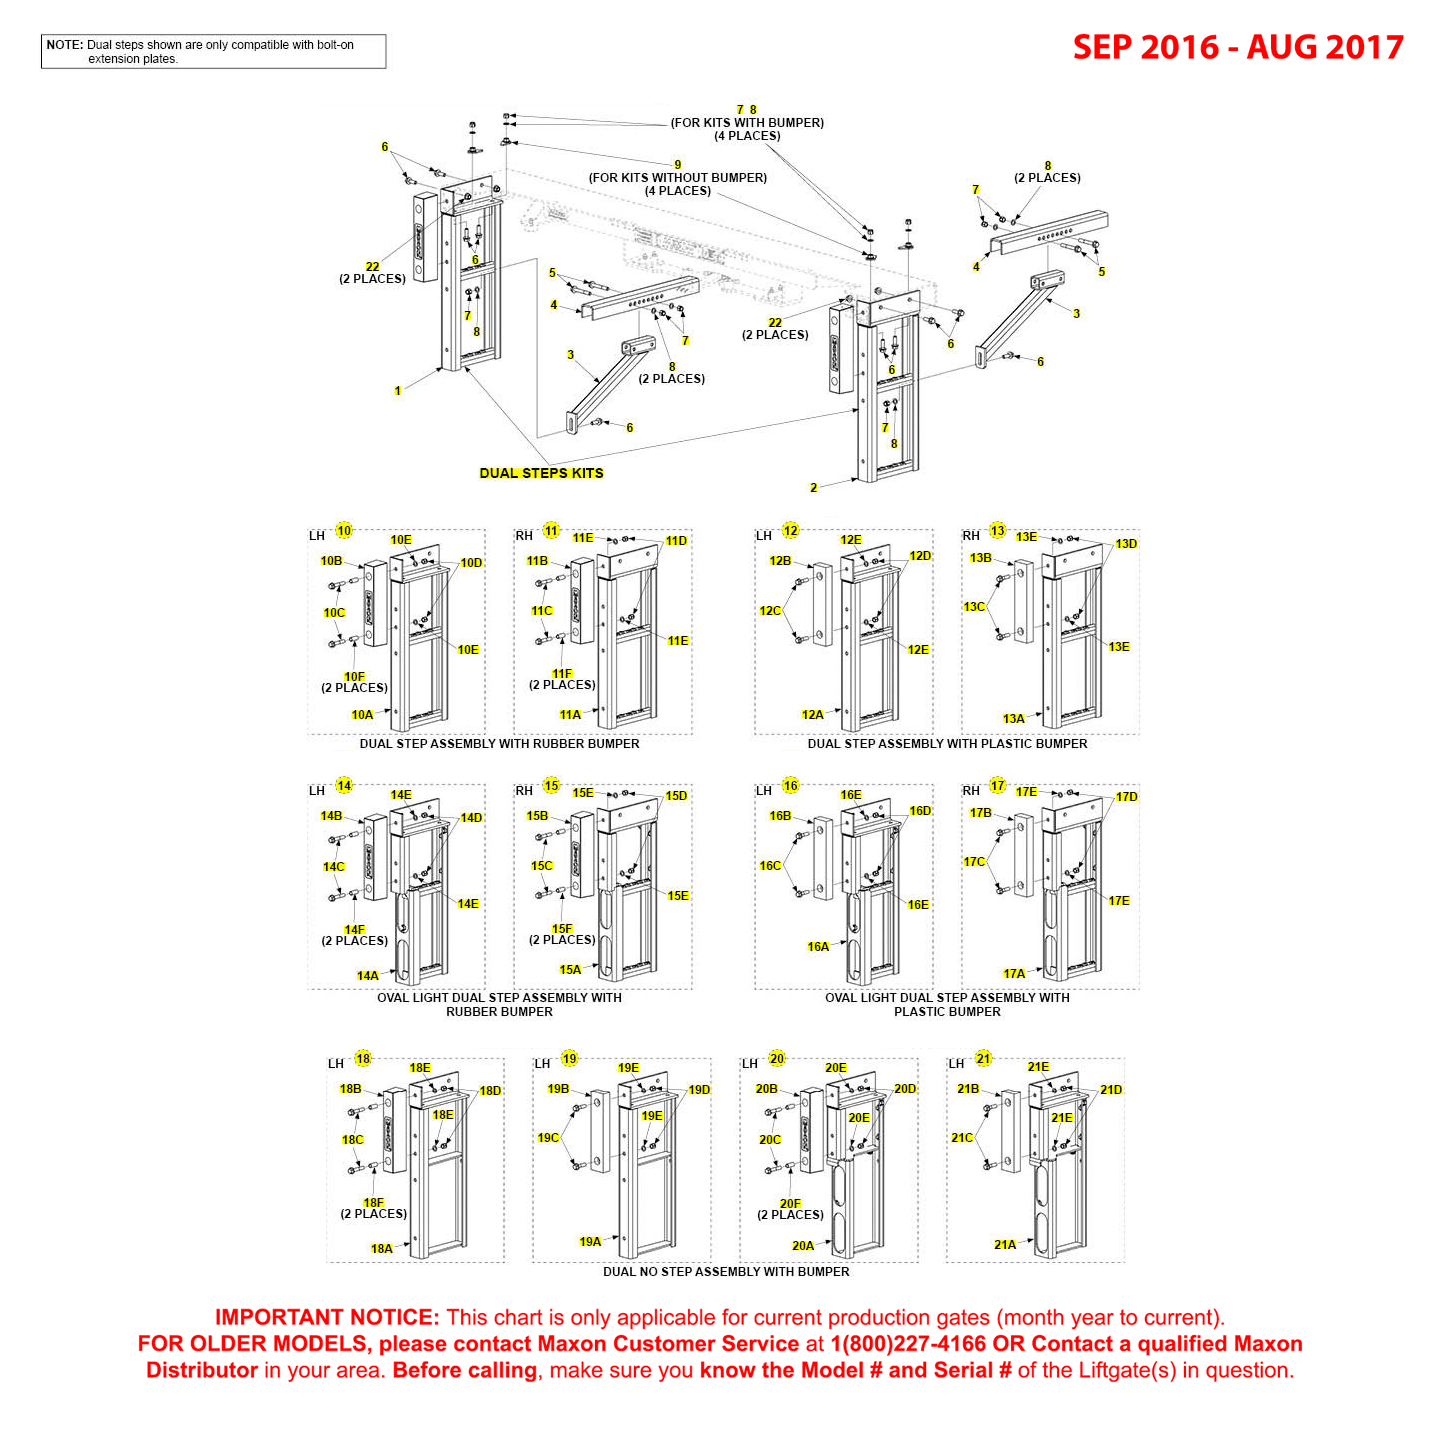 Maxon GPTWR (Sep 2016 - Aug 2017) Dual Step Kits Diagram